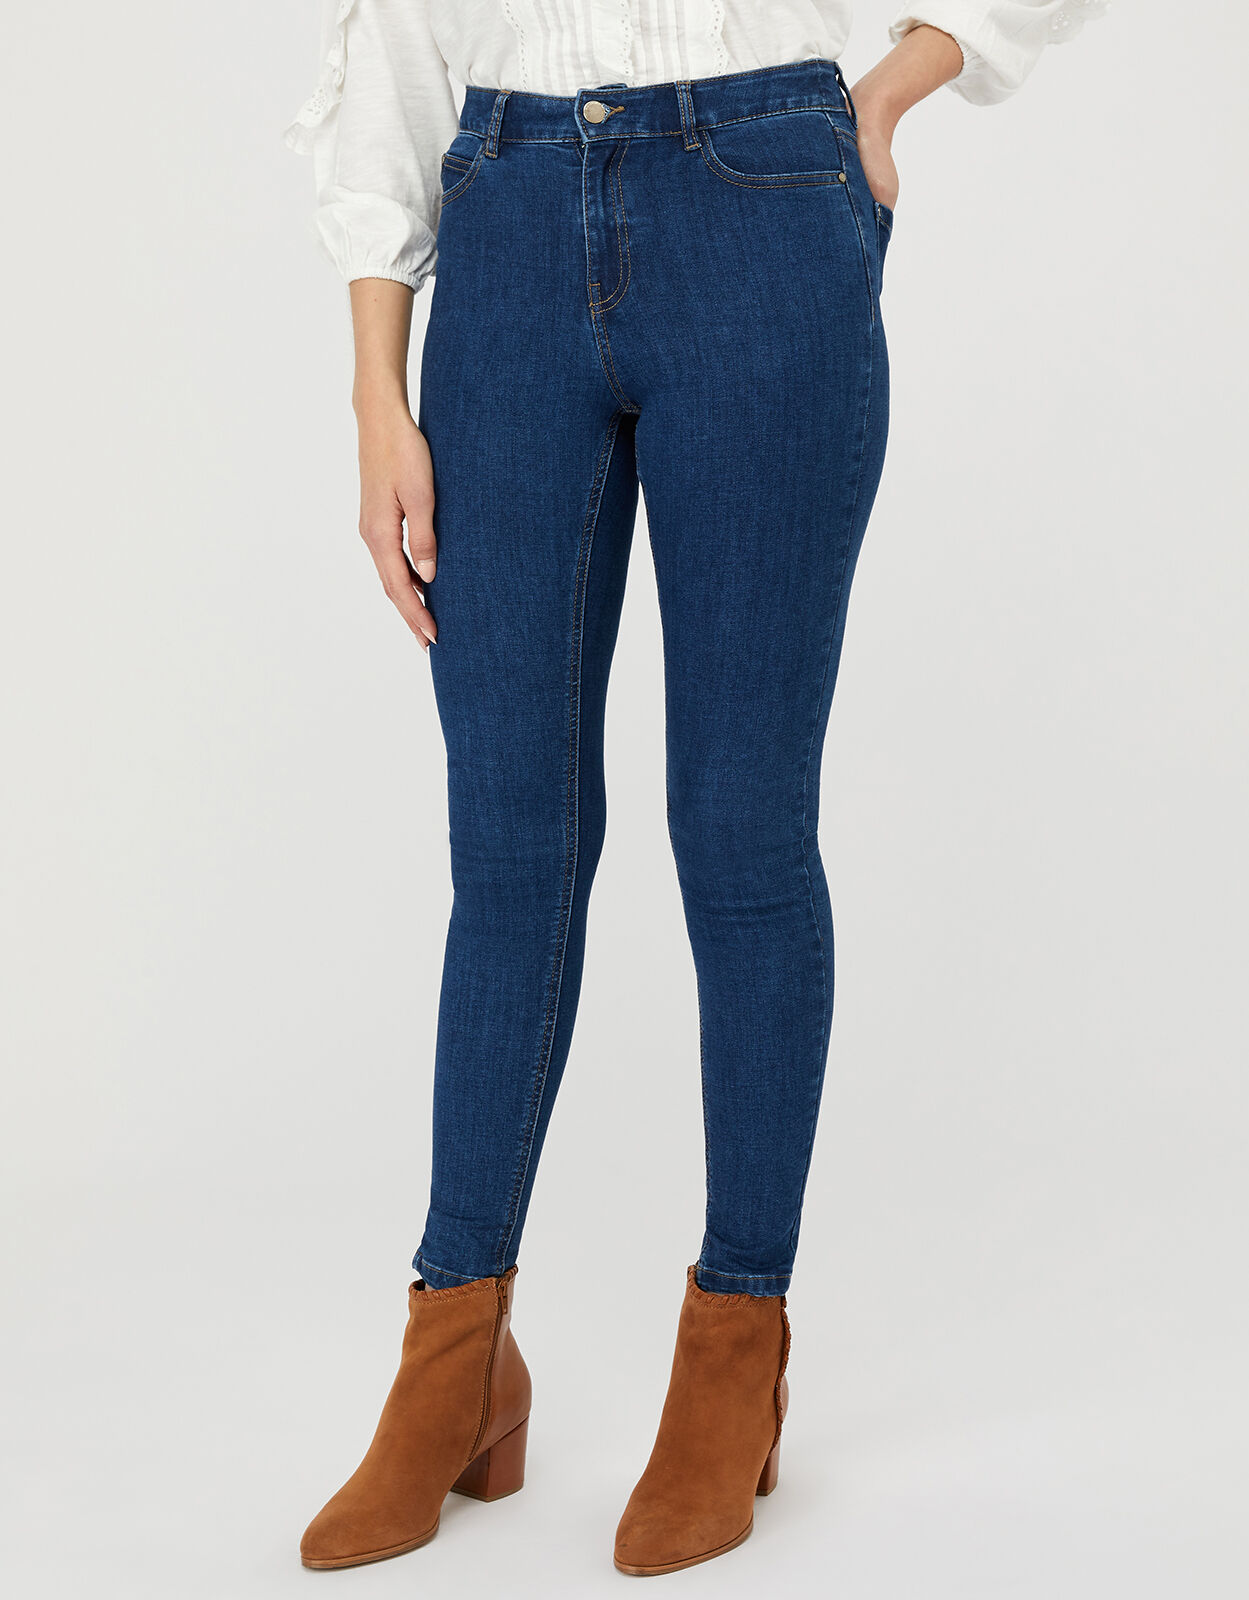 short length jeans